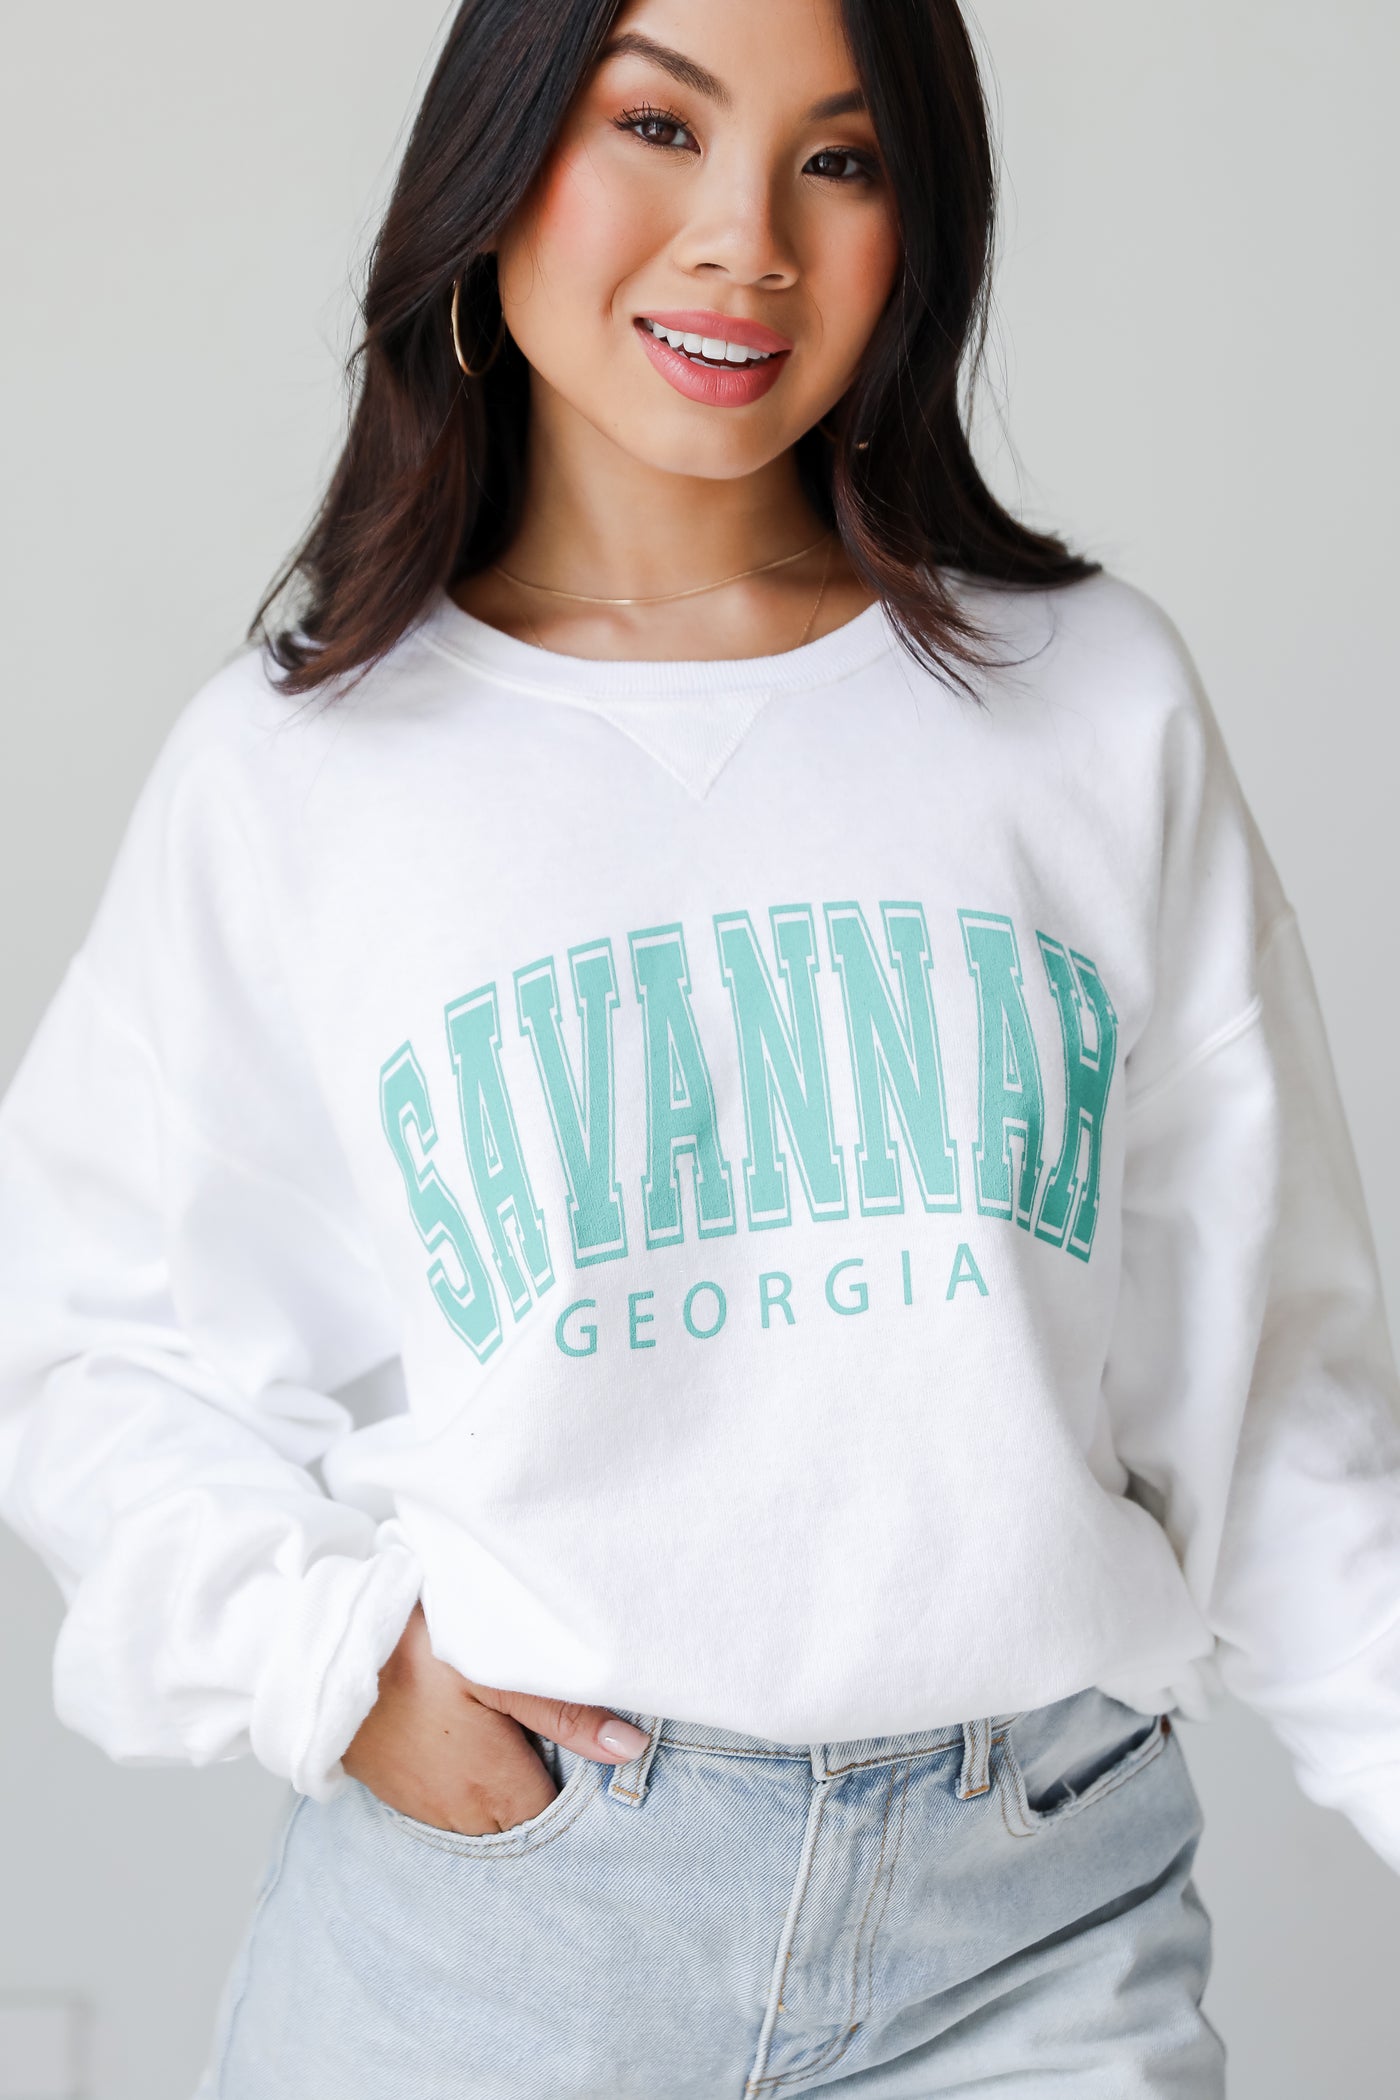 White Savannah Georgia Pullover. Savannah Sweatshirt. Graphic Sweatshirt. Oversized